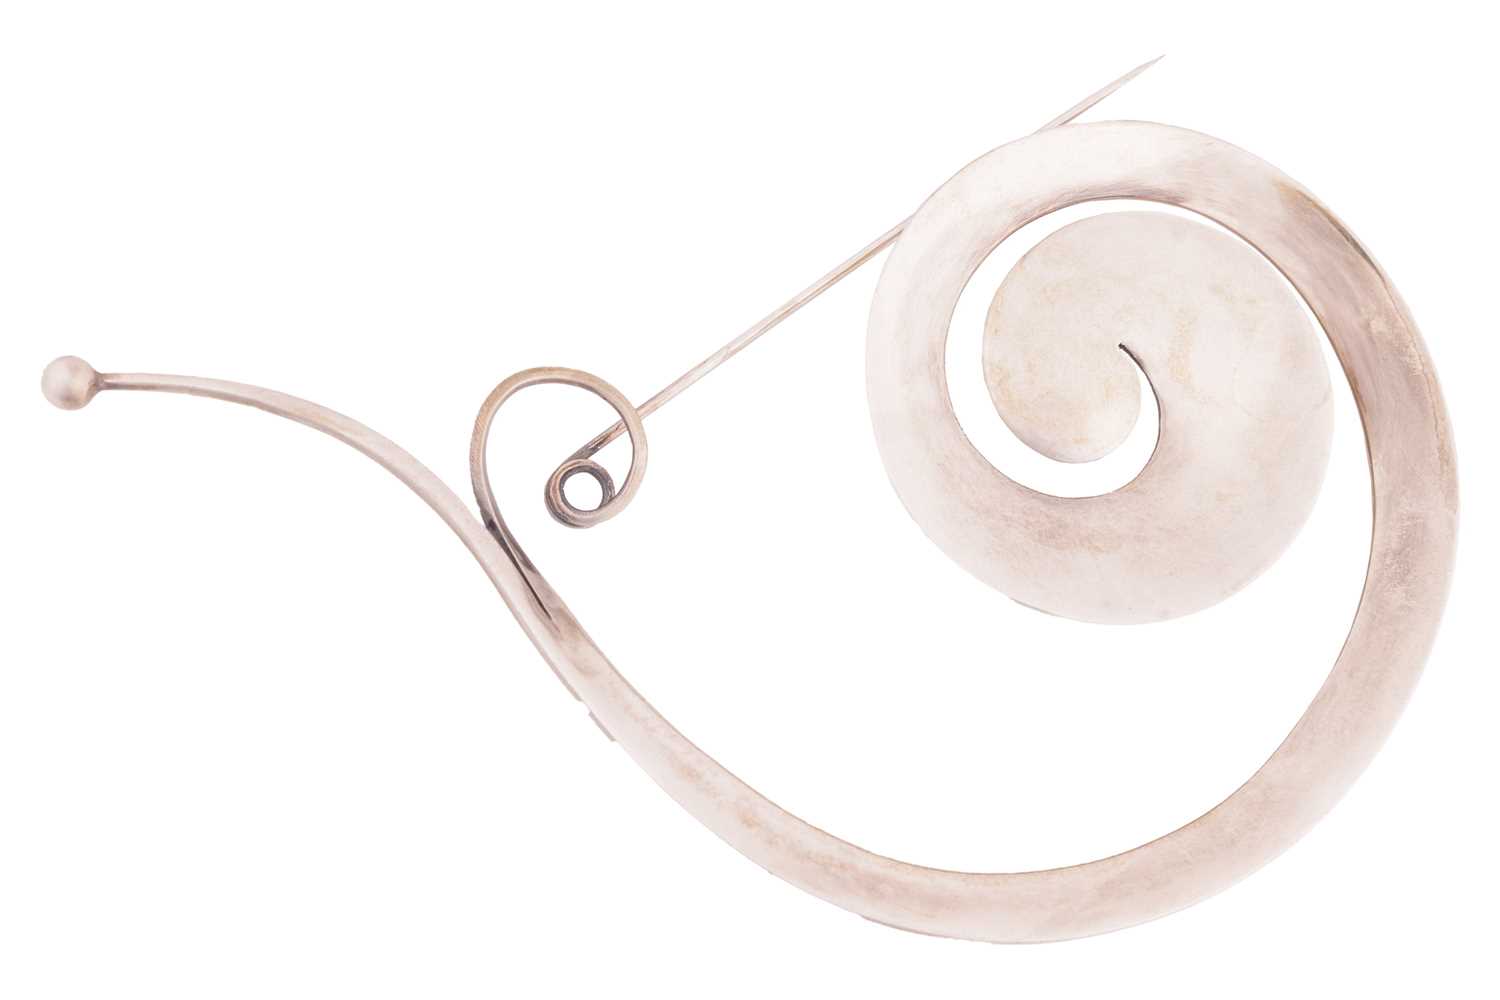 Georg Jensen - 'Pram' brooch of spiral form, designed by Vivianna Torun Bülow-Hübe, No. 392, post-19